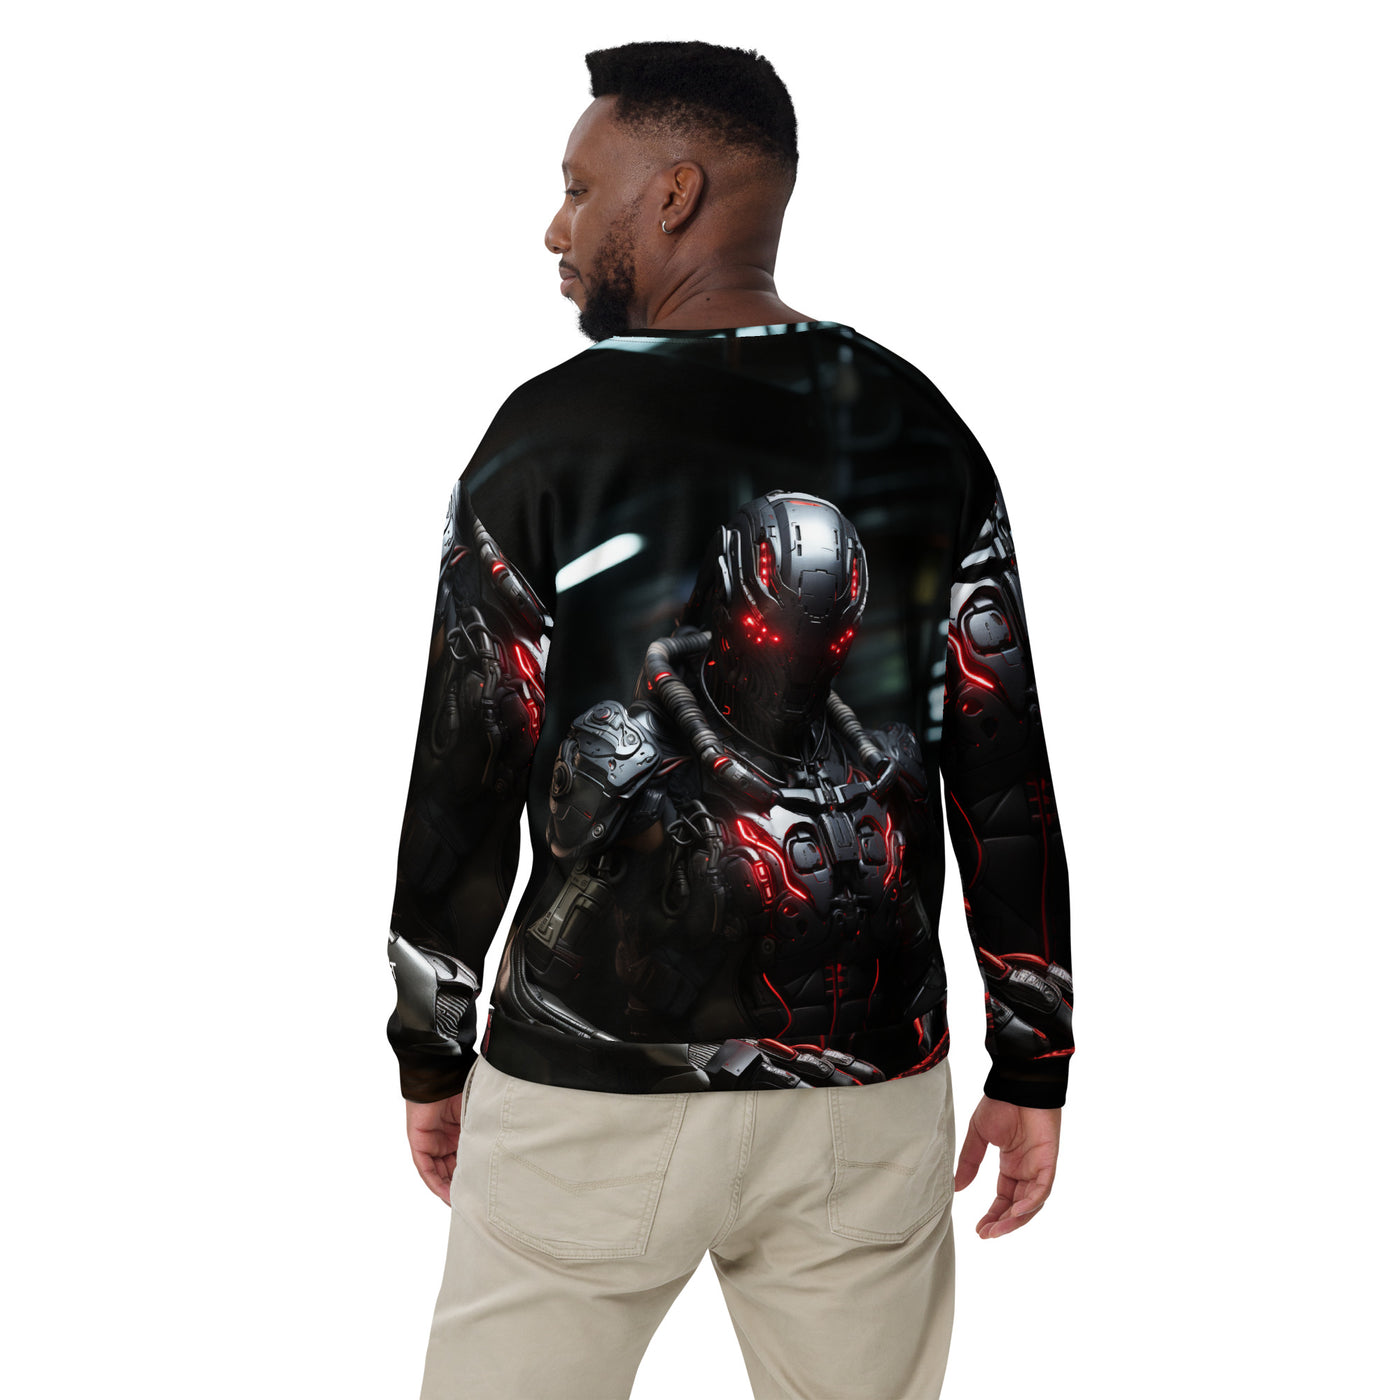 CyberArms Warrior V3 - Unisex Sweatshirt